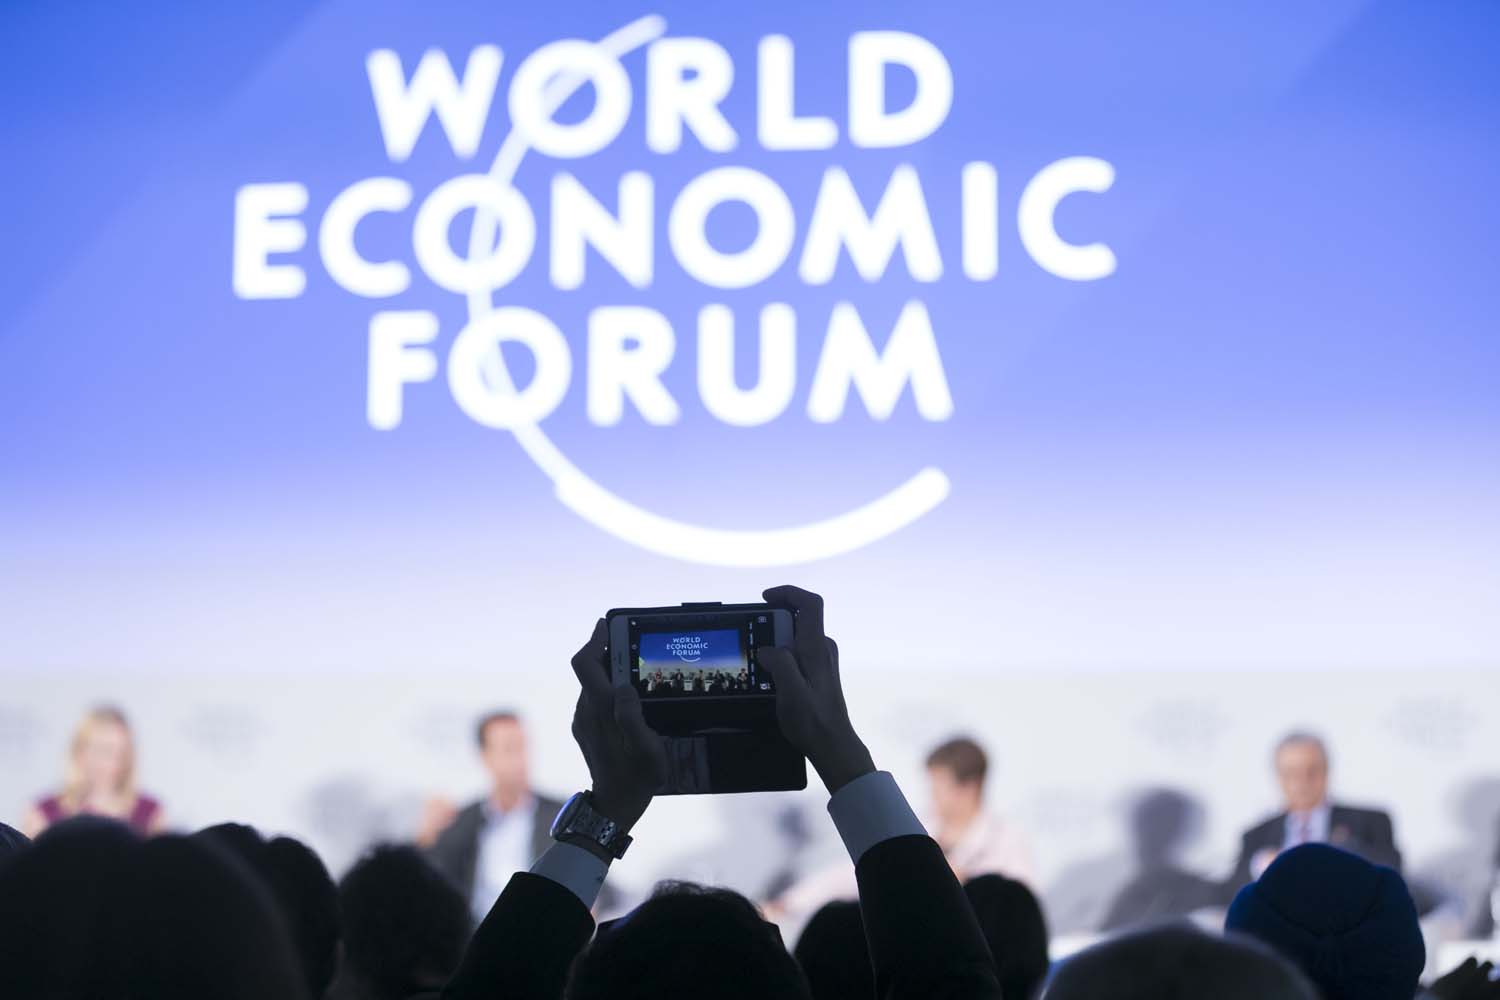 World Economic Forum Conference Photographer in New York City